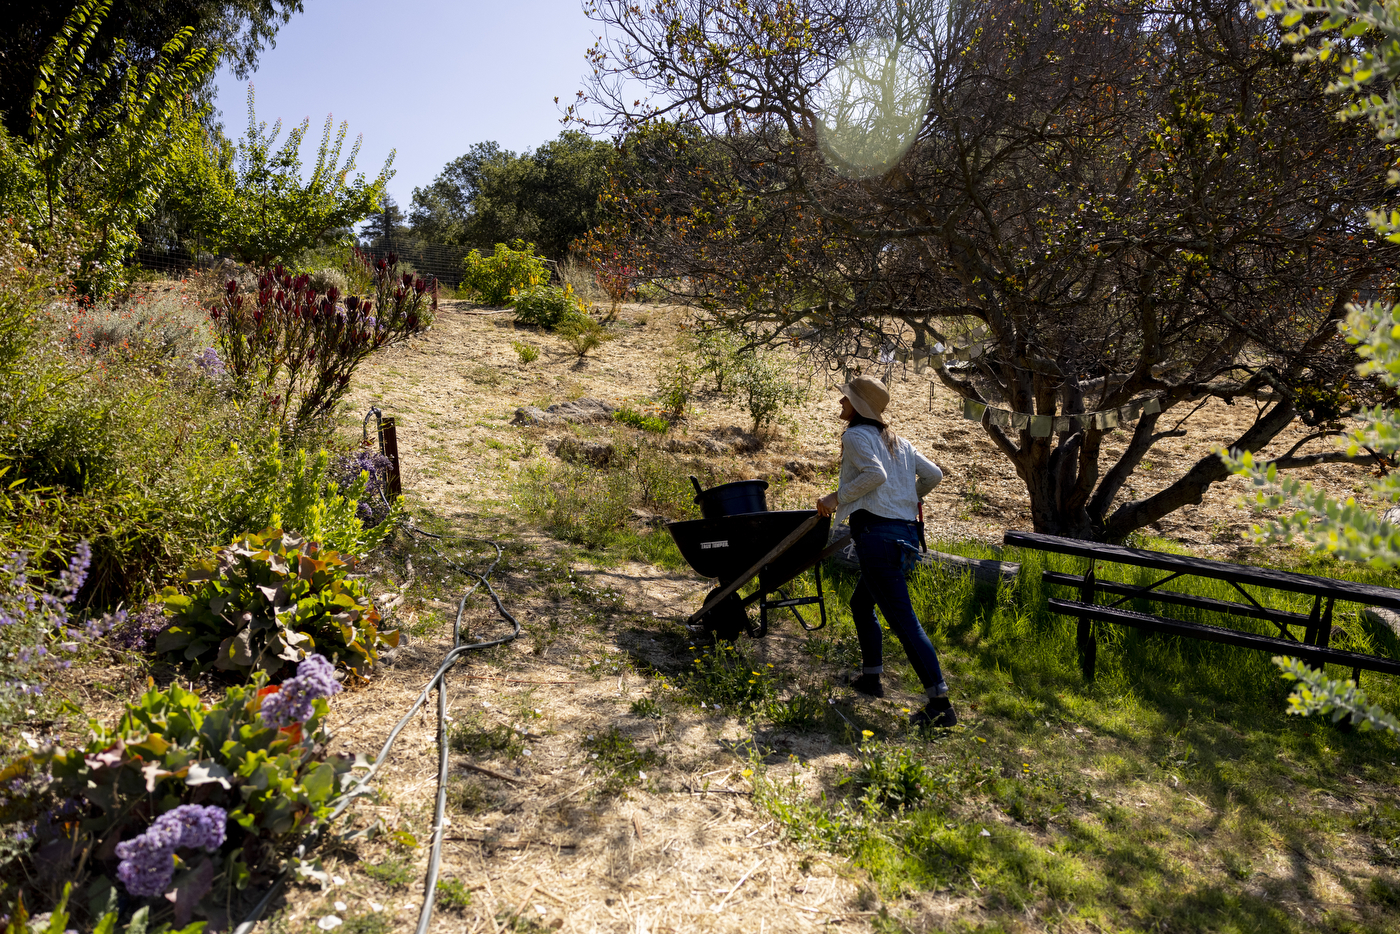 A person pushing a wheelbarrow on Northeastern's Oakland campus farm.